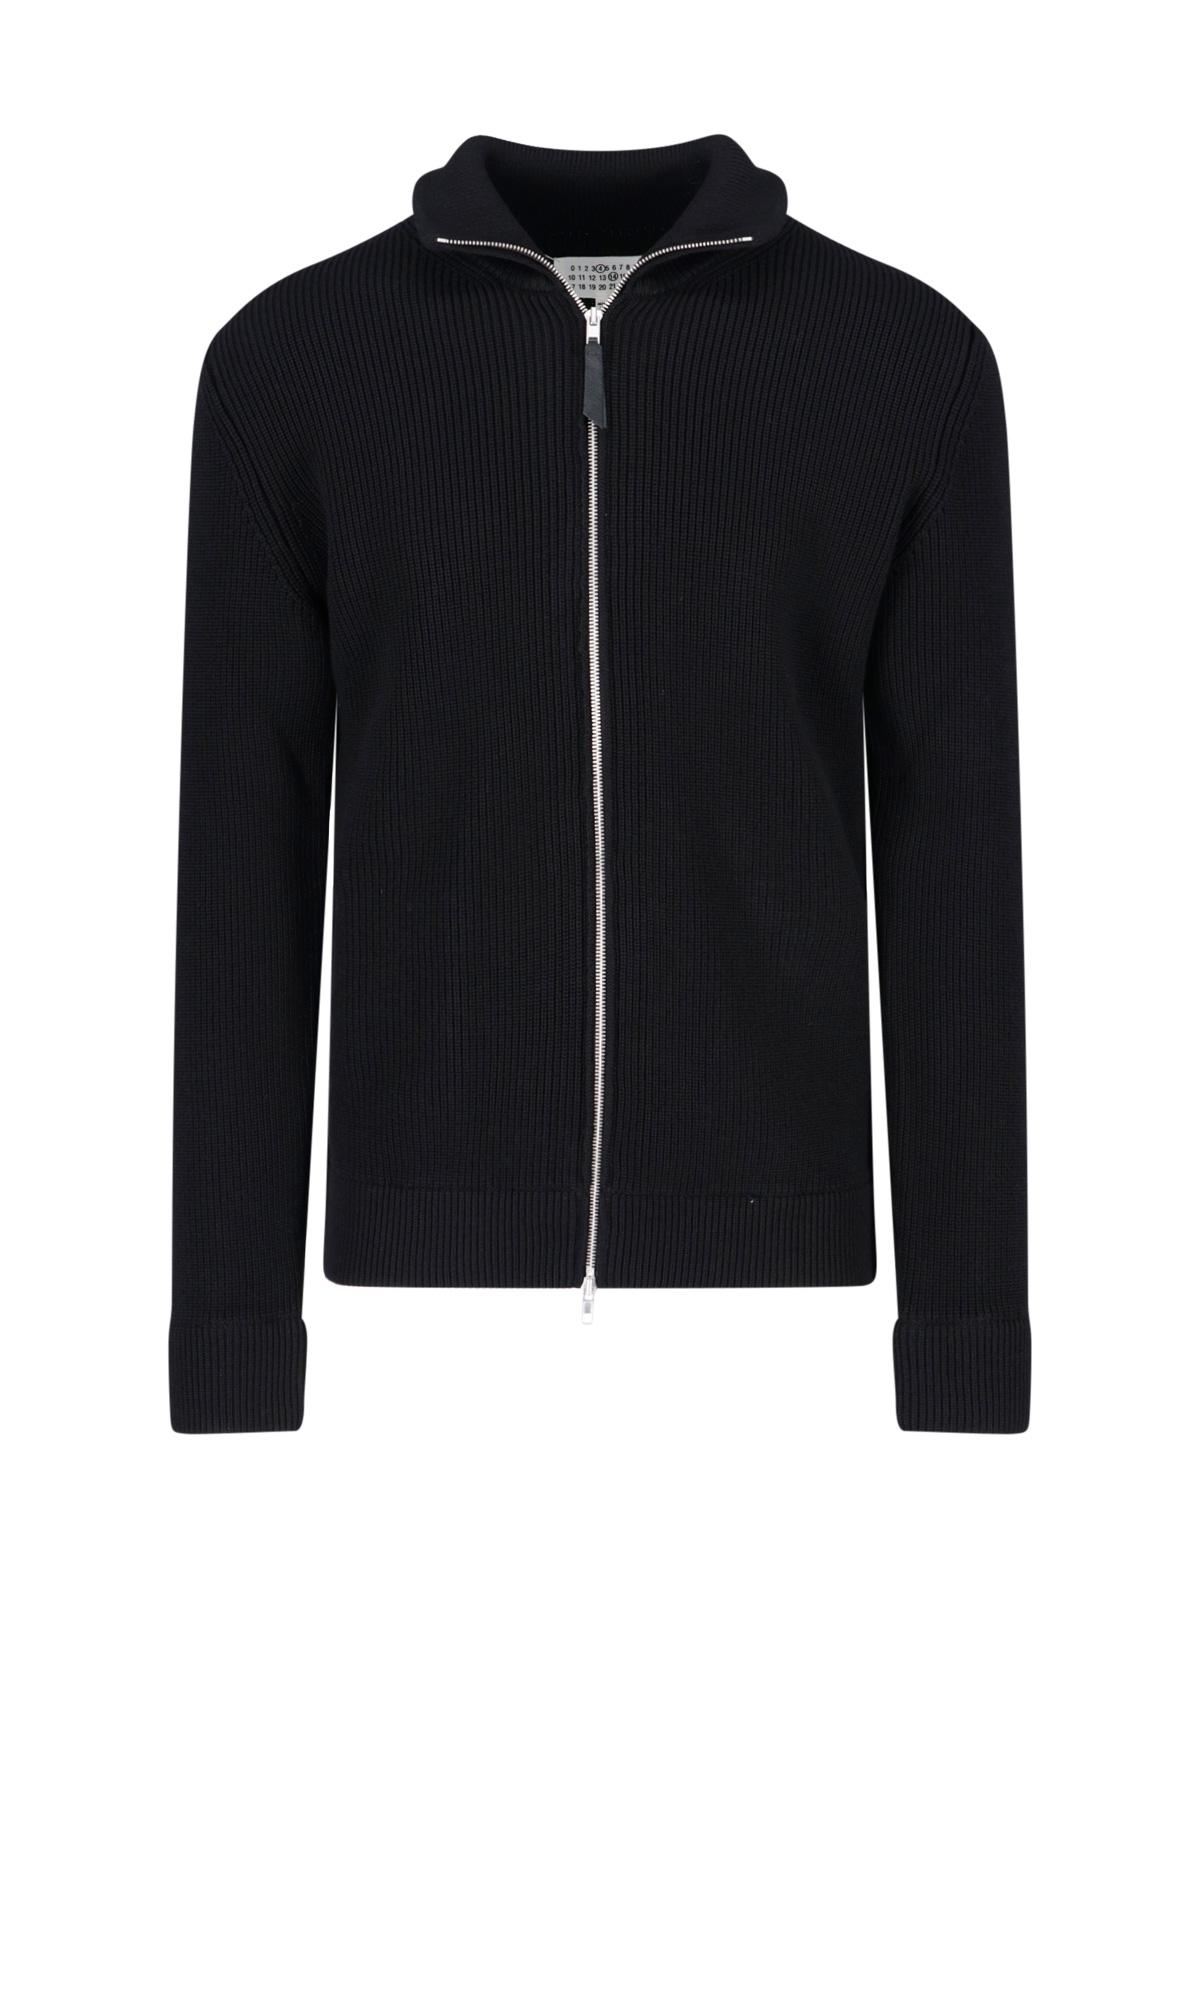 Maison Margiela Zip Sweater in Black for Men | Lyst